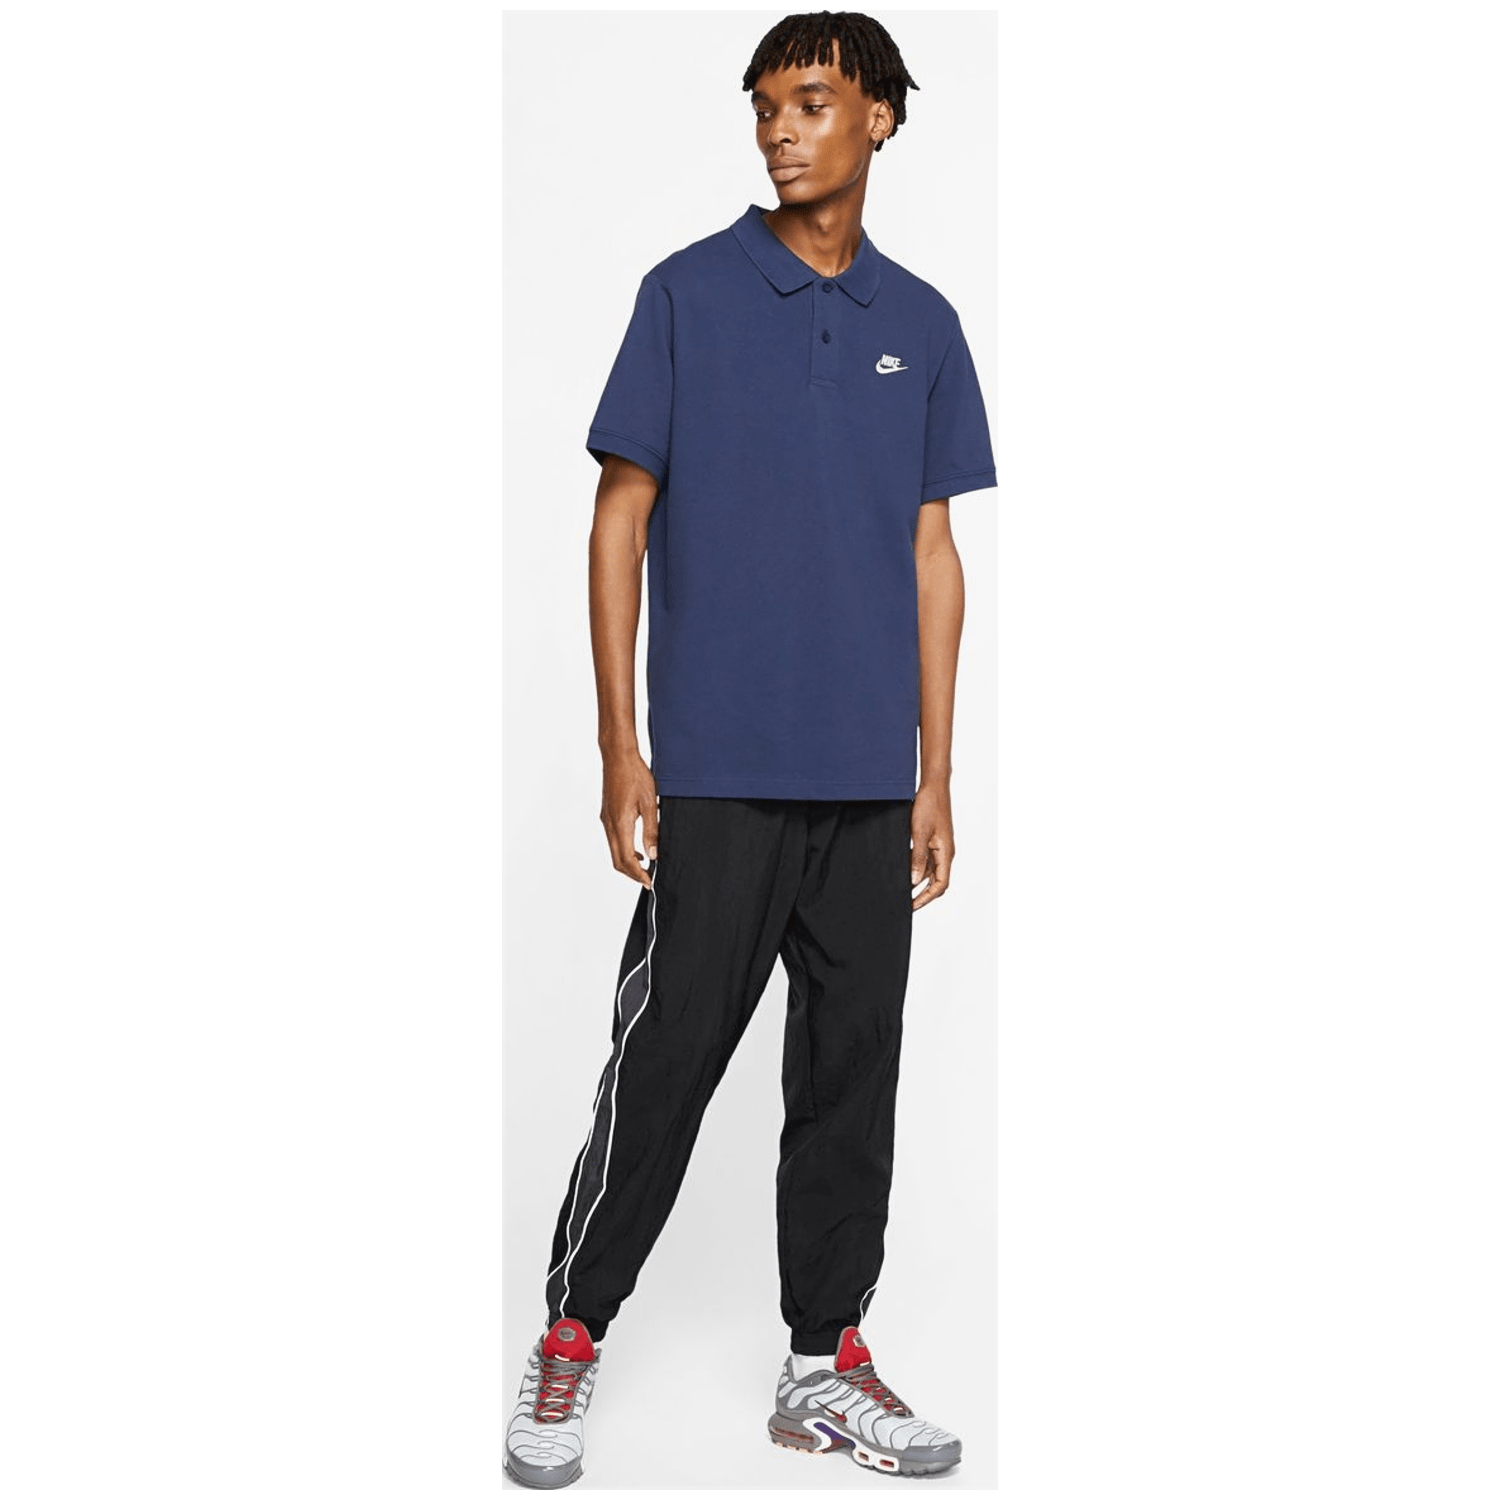 Nike Sportswear Polo Herren Poloshirt